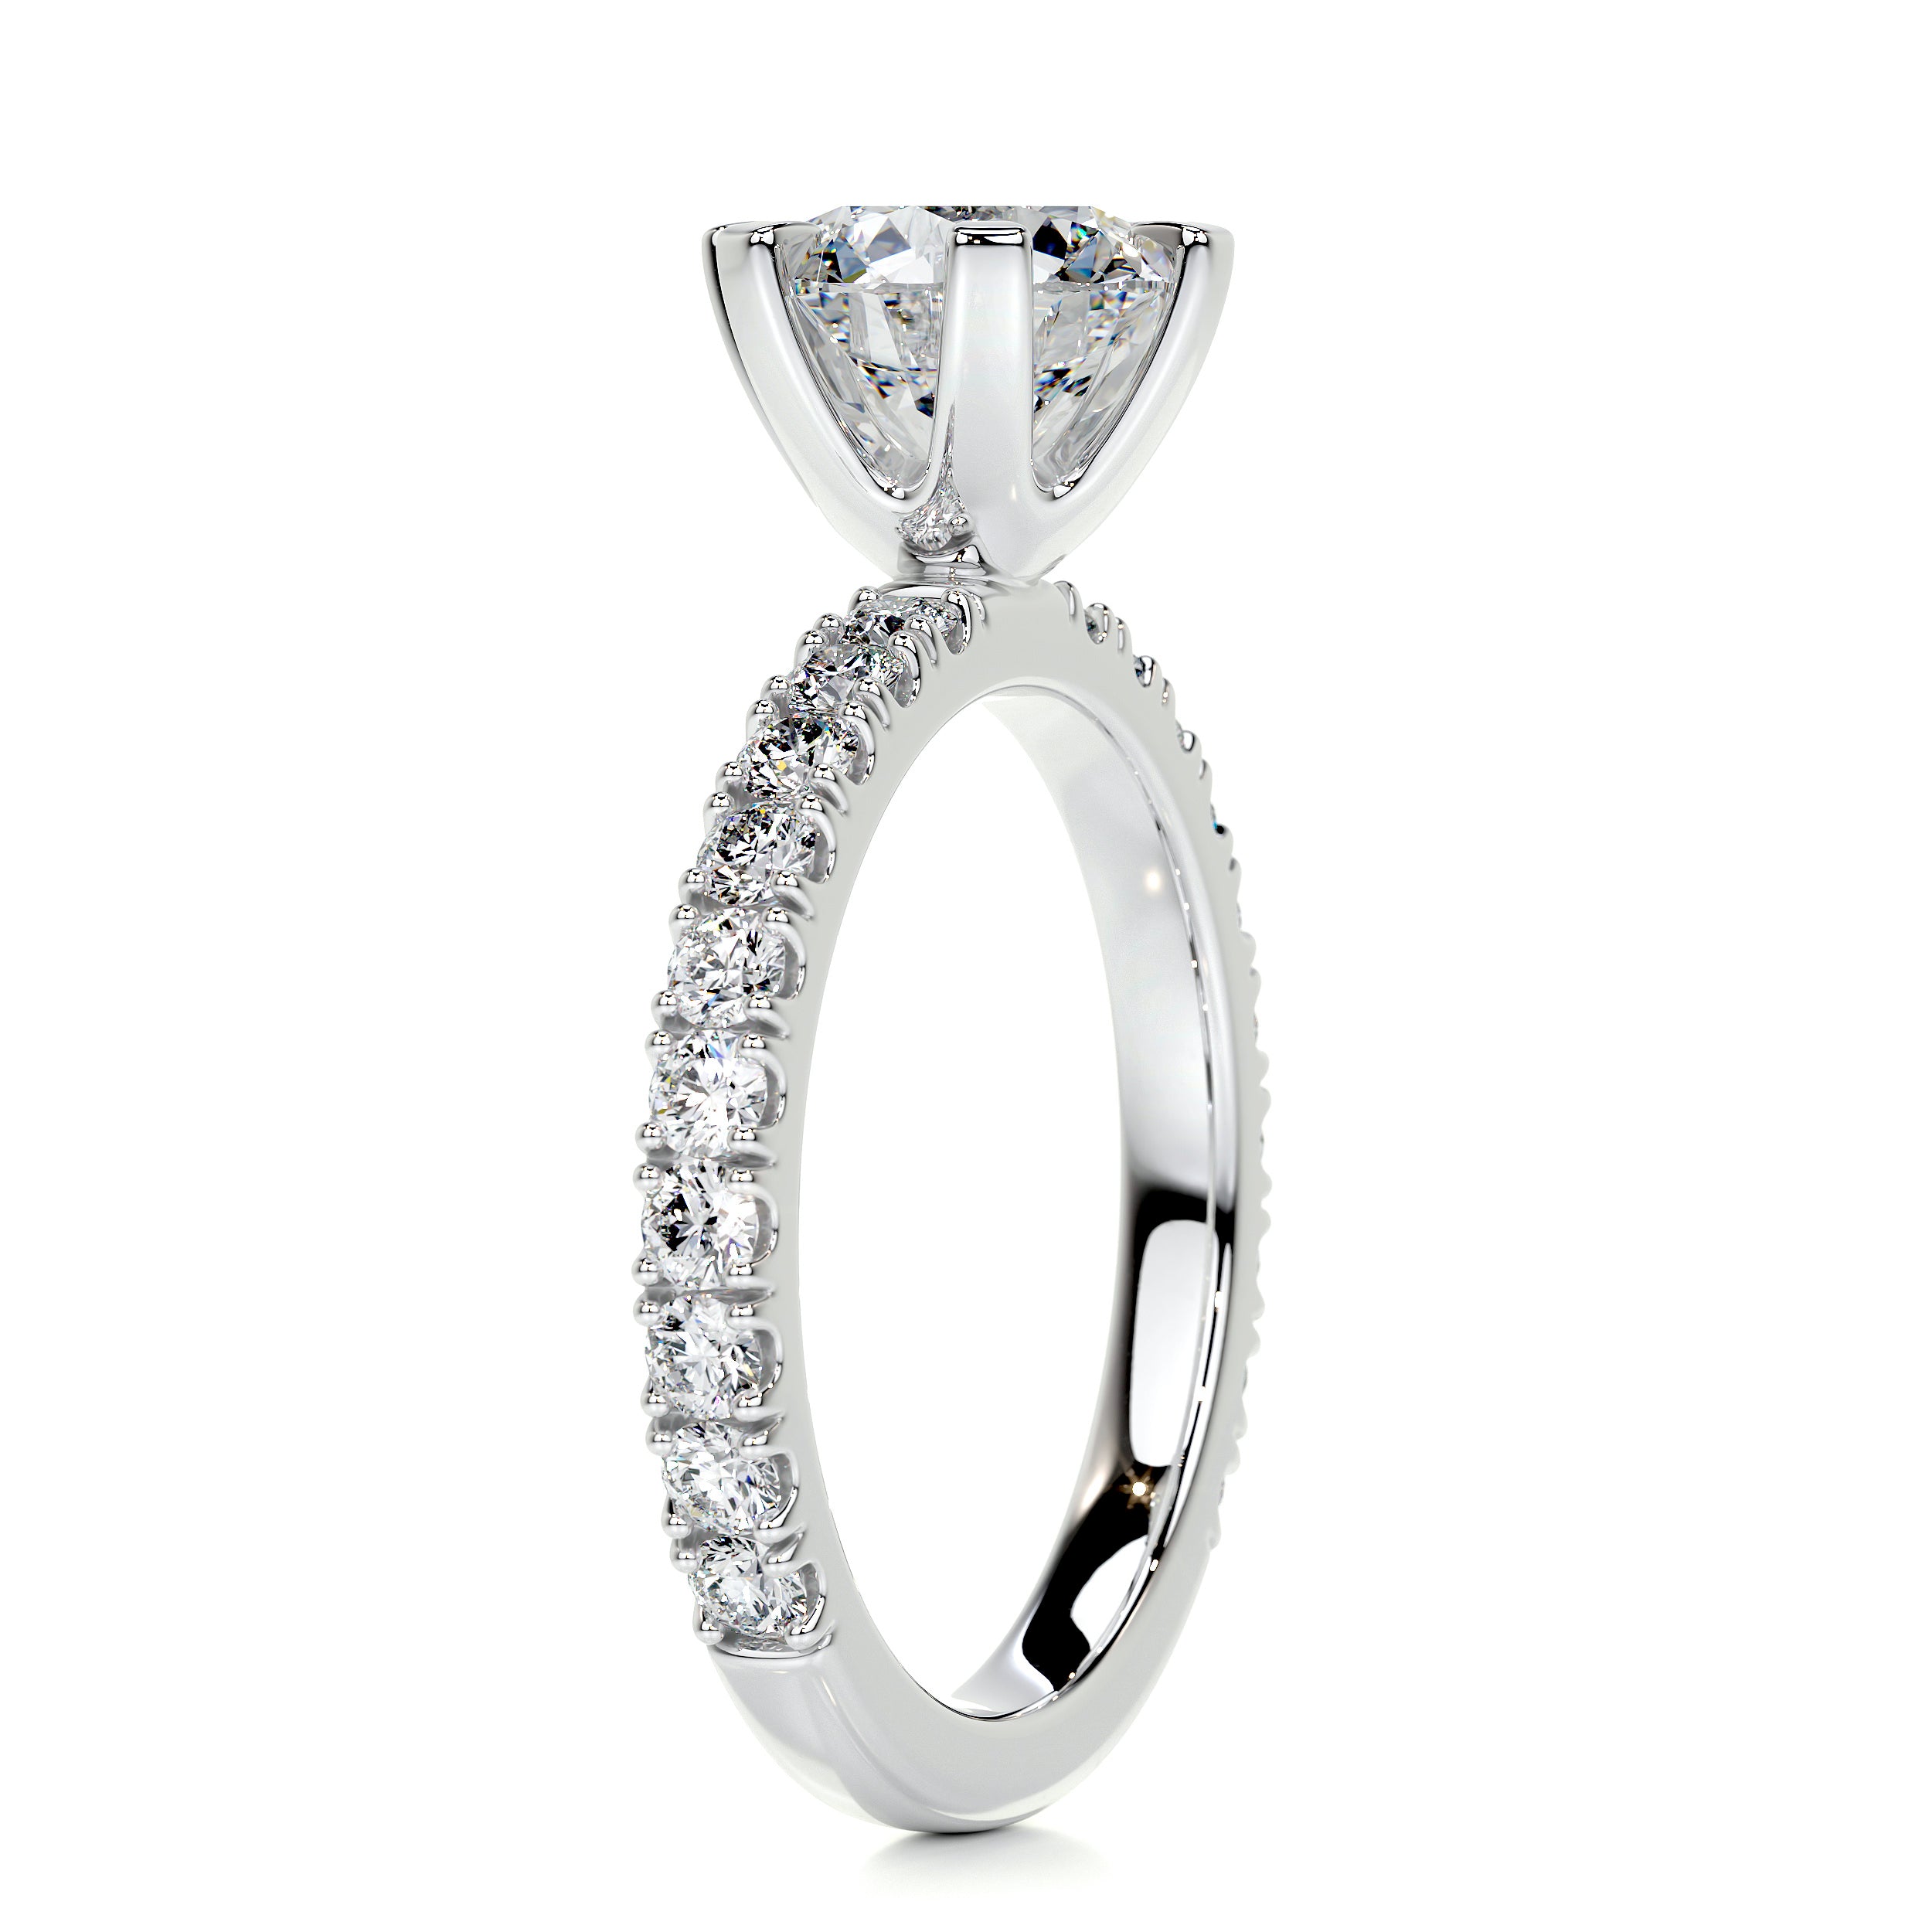 Veronica Diamond Engagement Ring   (2 Carat) -14K White Gold